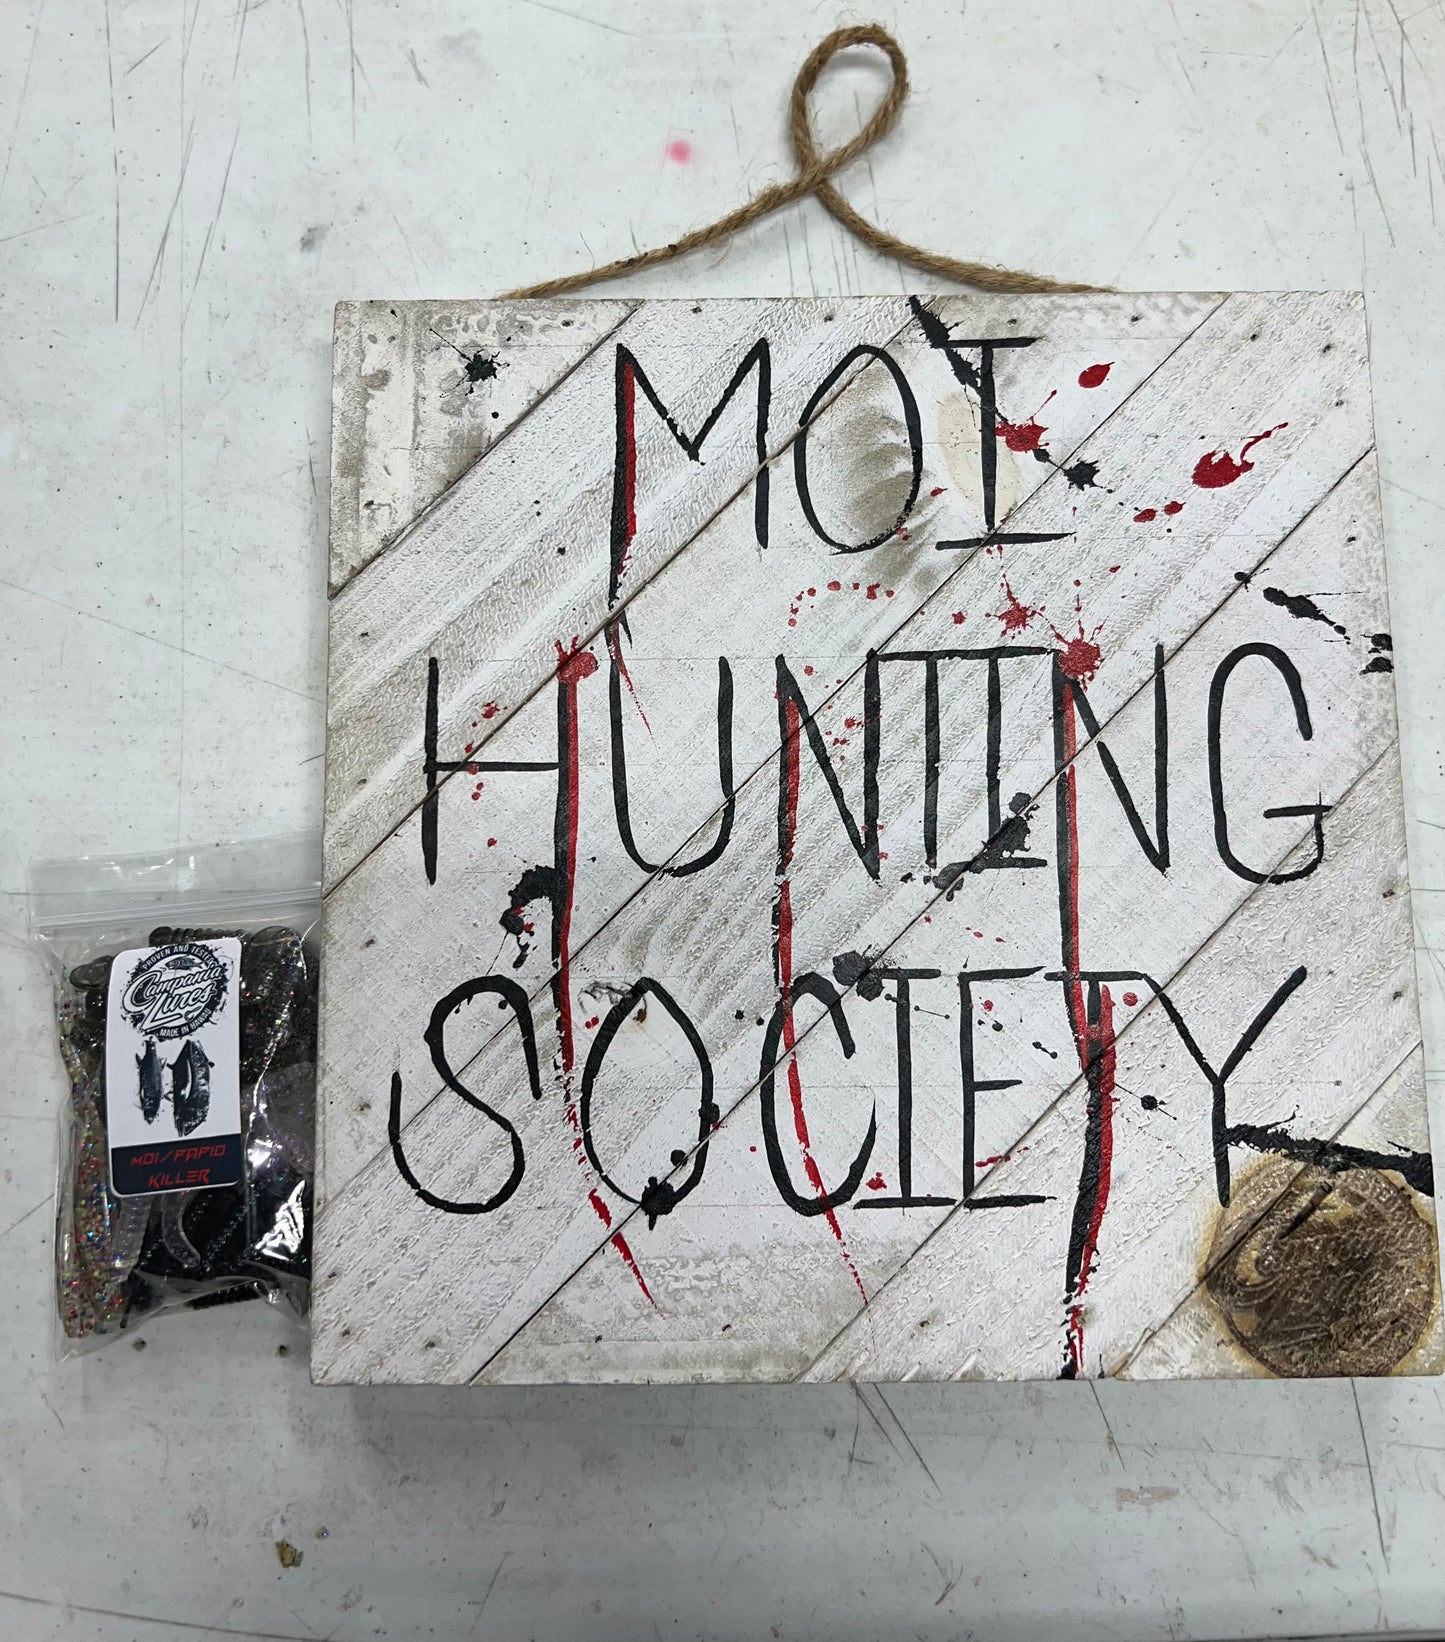 10"x10" Hawaii Moi Hunting Society (White wood Panel) and Moi/Papio Killer pack combo.